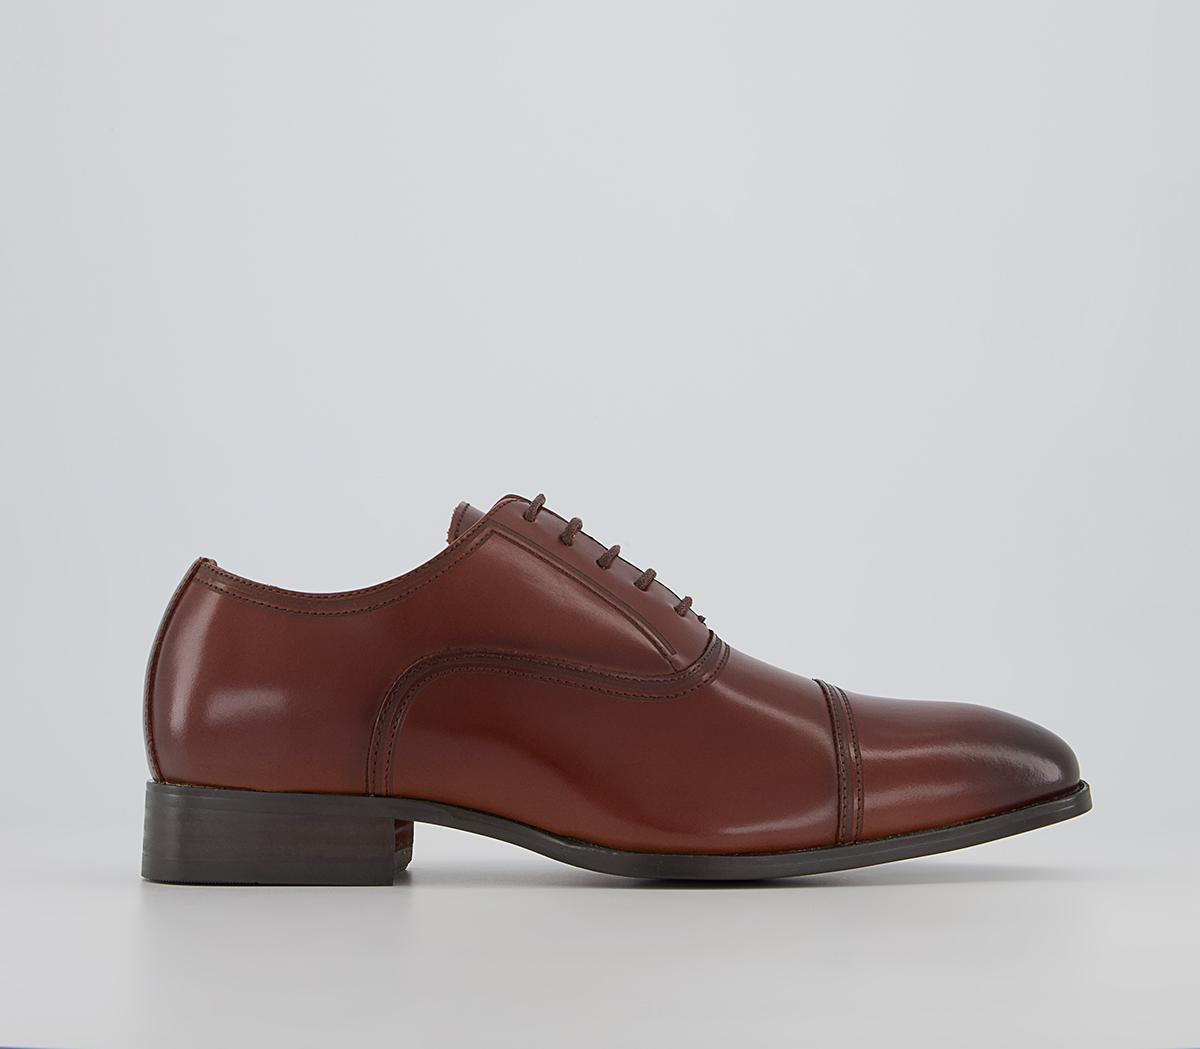 OFFICE Maresco High Shine Toe Cap Oxford Shoes Tan Leather - Men’s ...